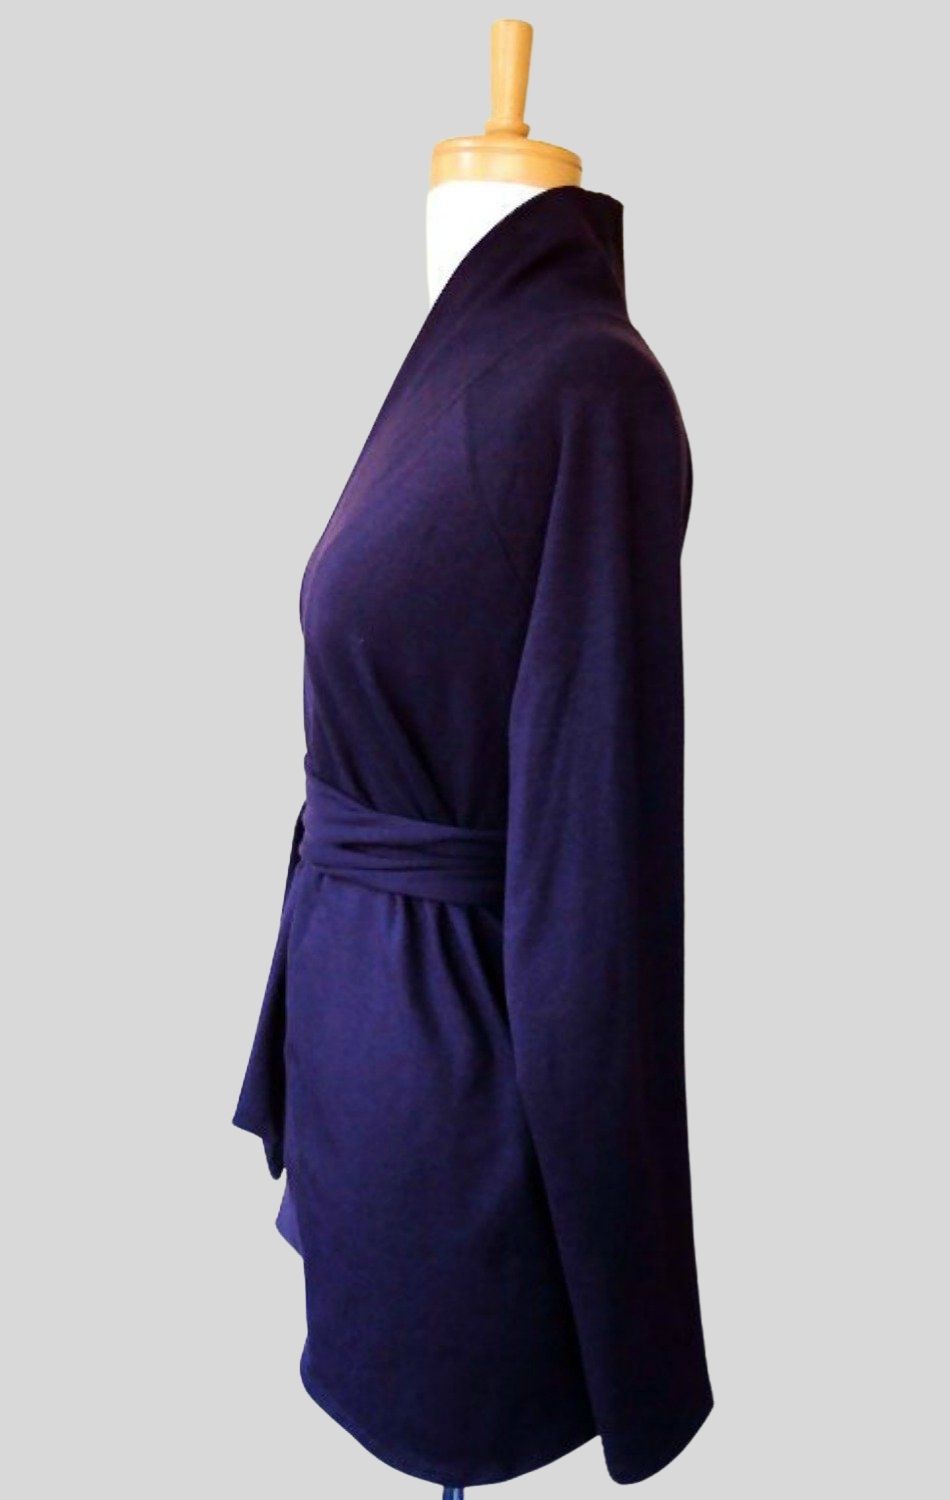 Shop women's cardigans | Made in Canada long cardigan top for women | Econica organic clothing shop 